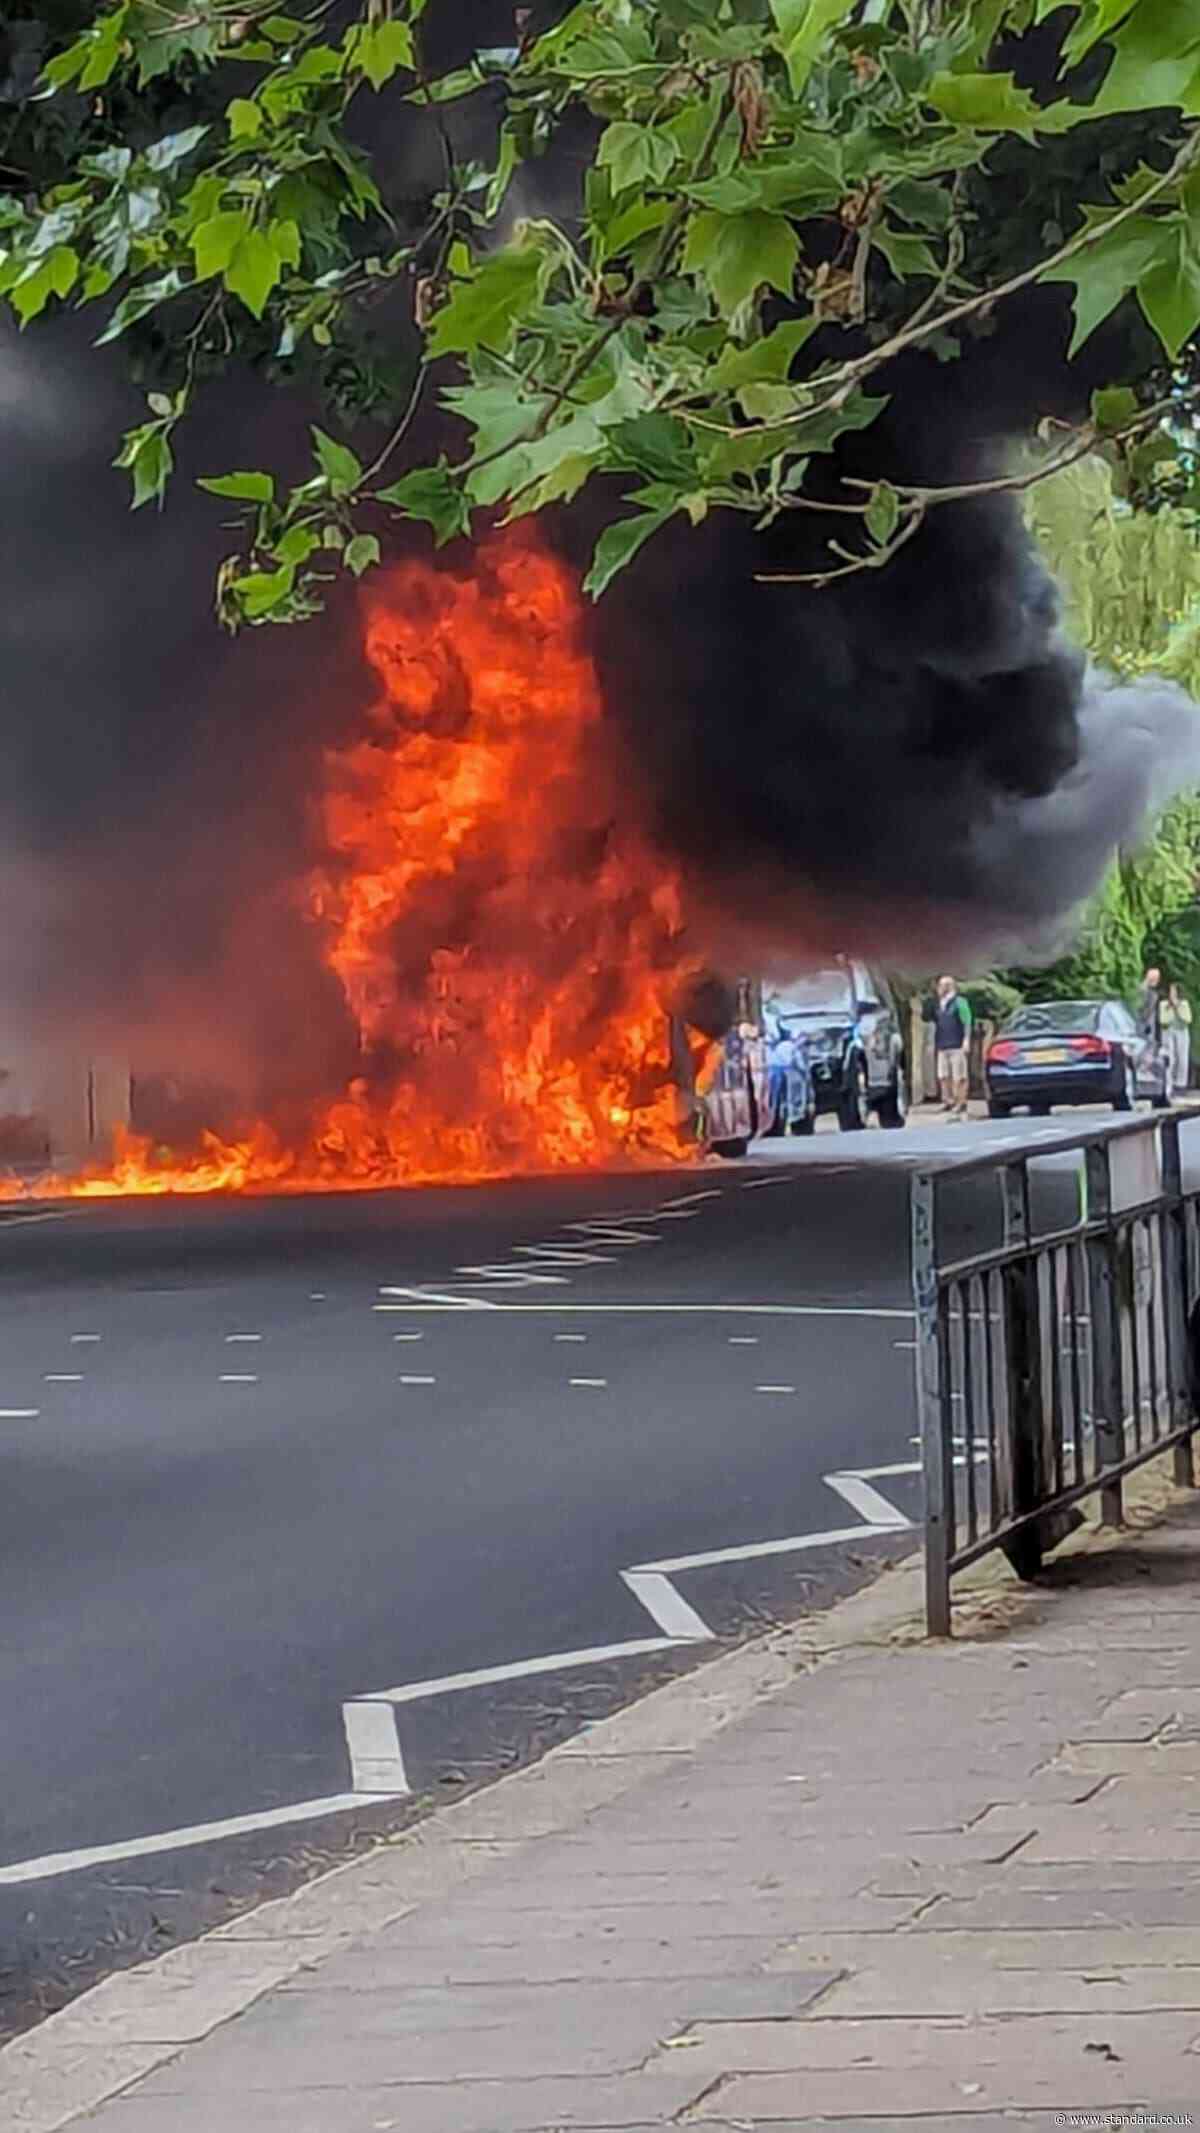 Horror as bus bursts into flames in Twickenham